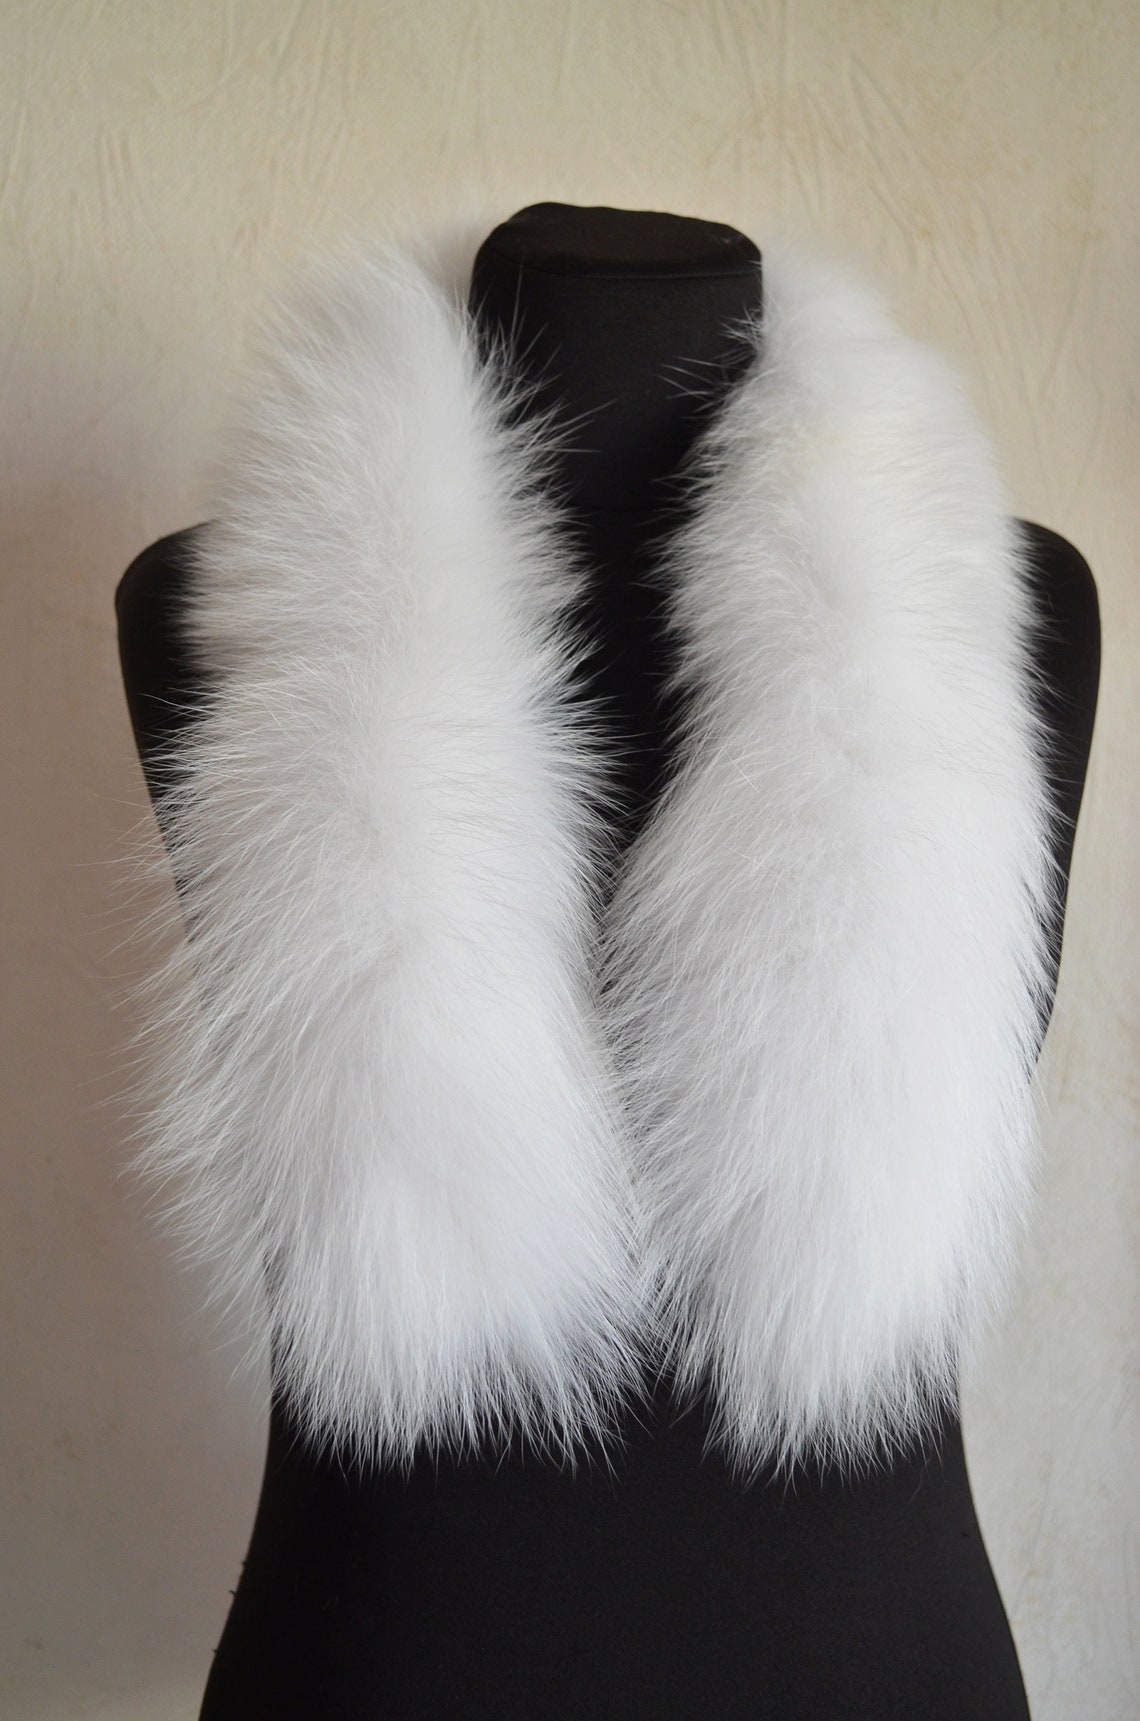 White fox fur trim 80cm 31.5 lenght Soft fluffy genuine | Etsy